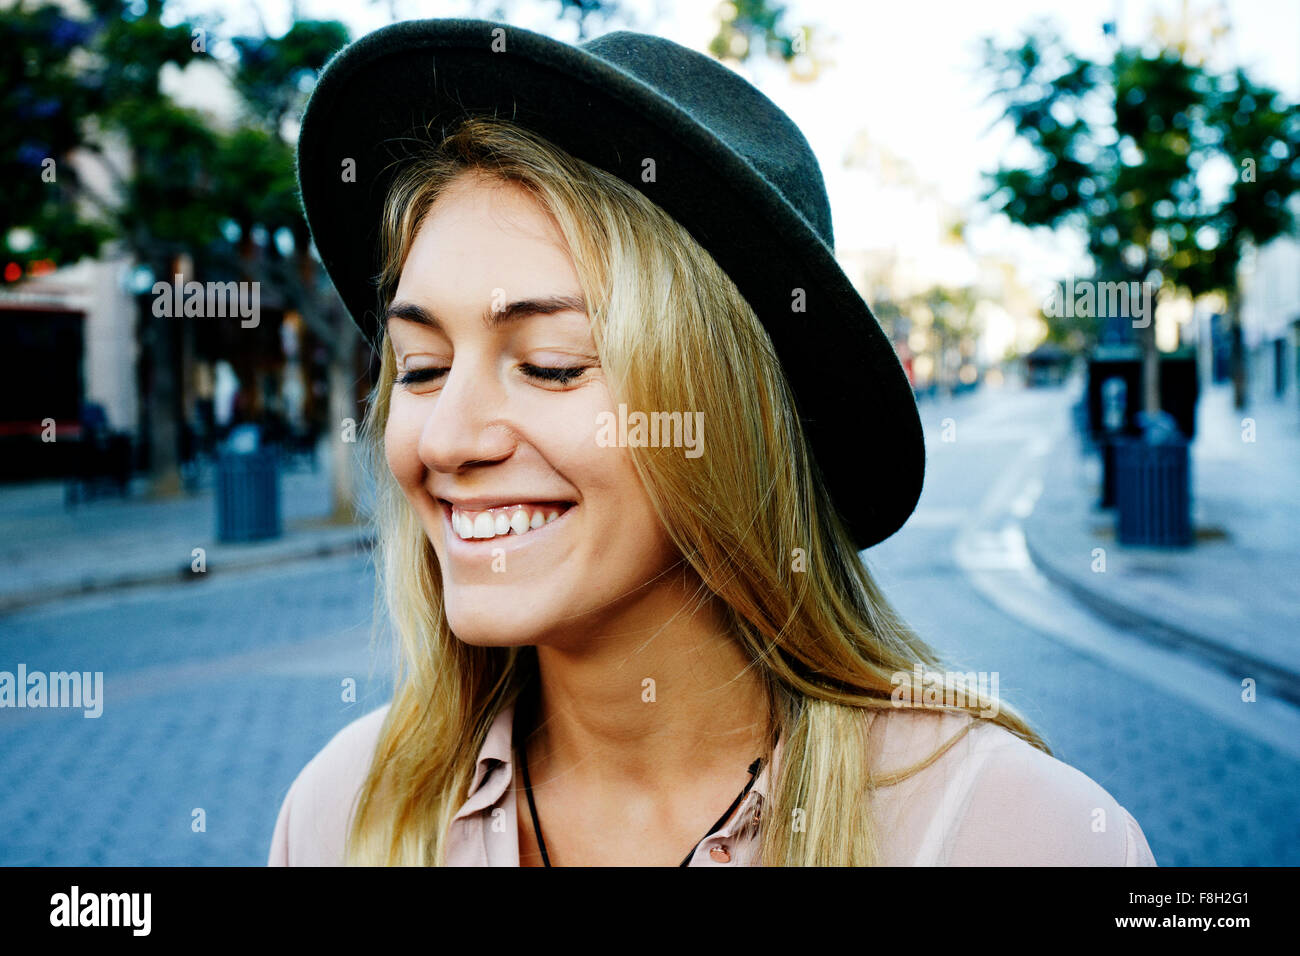 Caucasian woman smiling outdoors Stock Photo